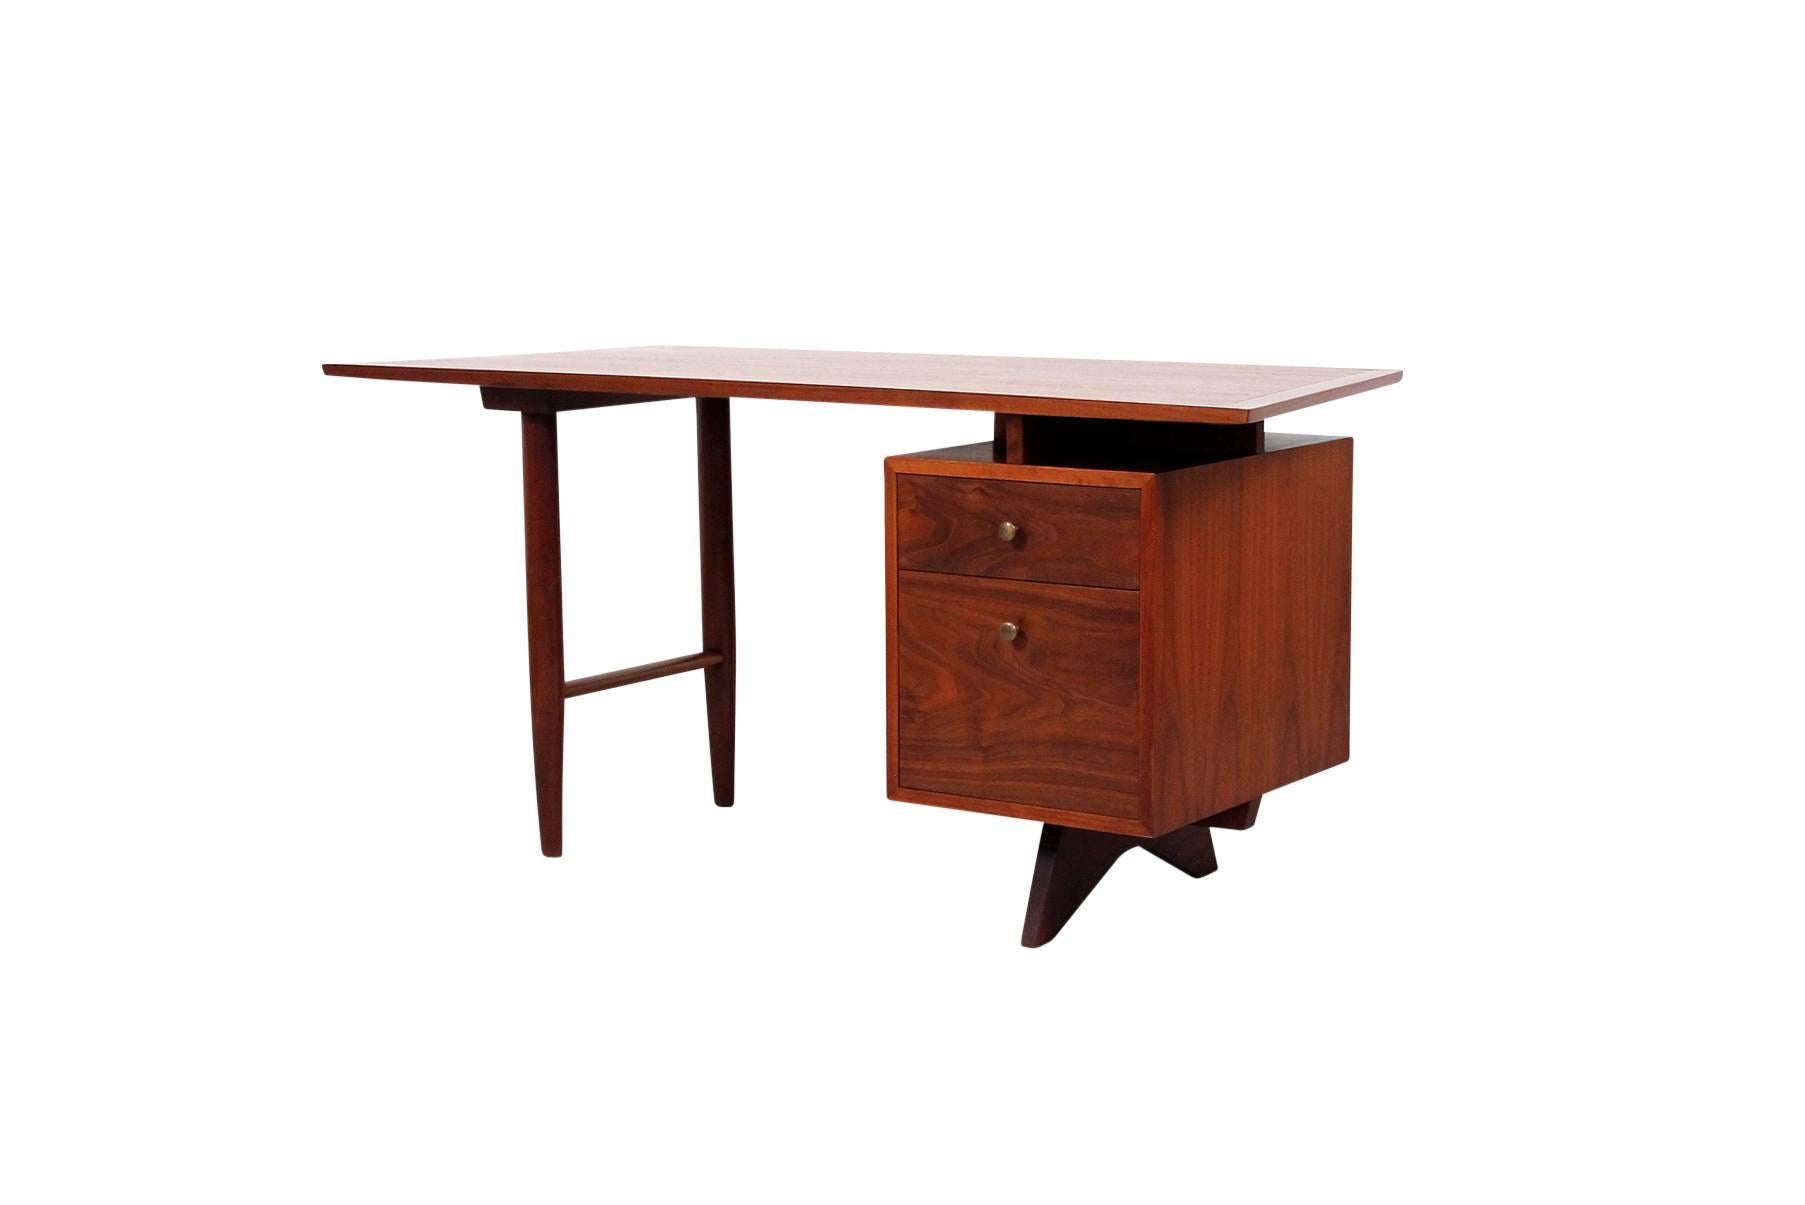 George Nakashima designed desk for the Widdicomb 